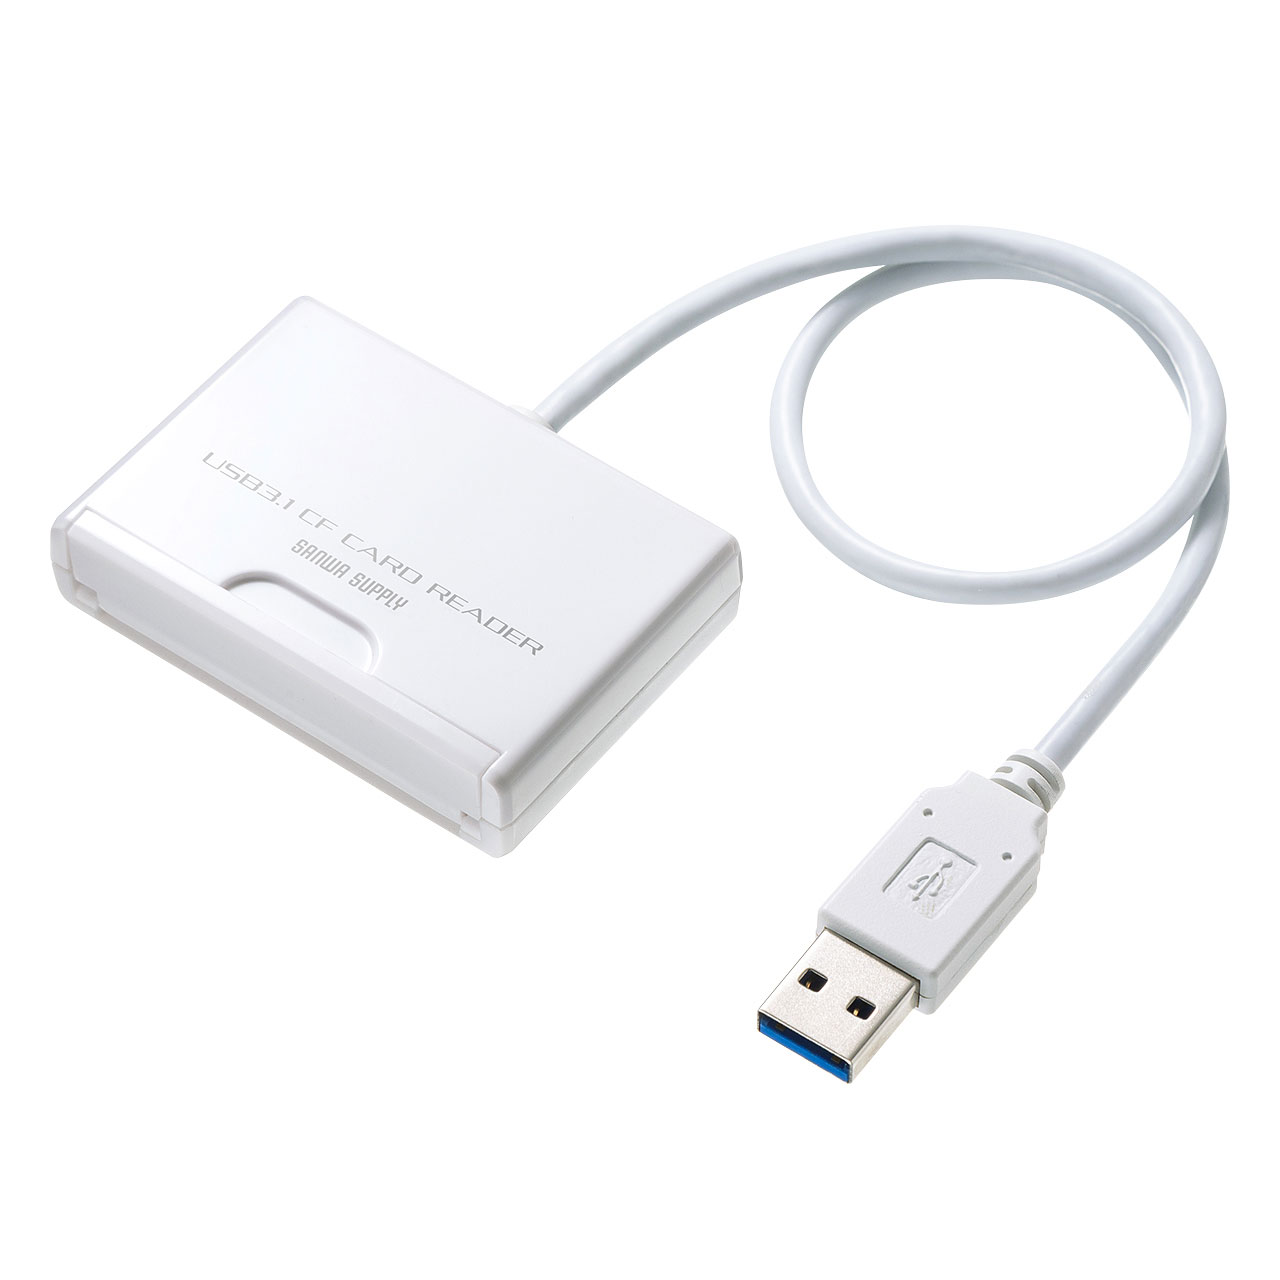 USB 3.1 Gen1（USB 3.0）対応CFカードリーダーを発売。｜サンワサプライ株式会社のプレスリリース